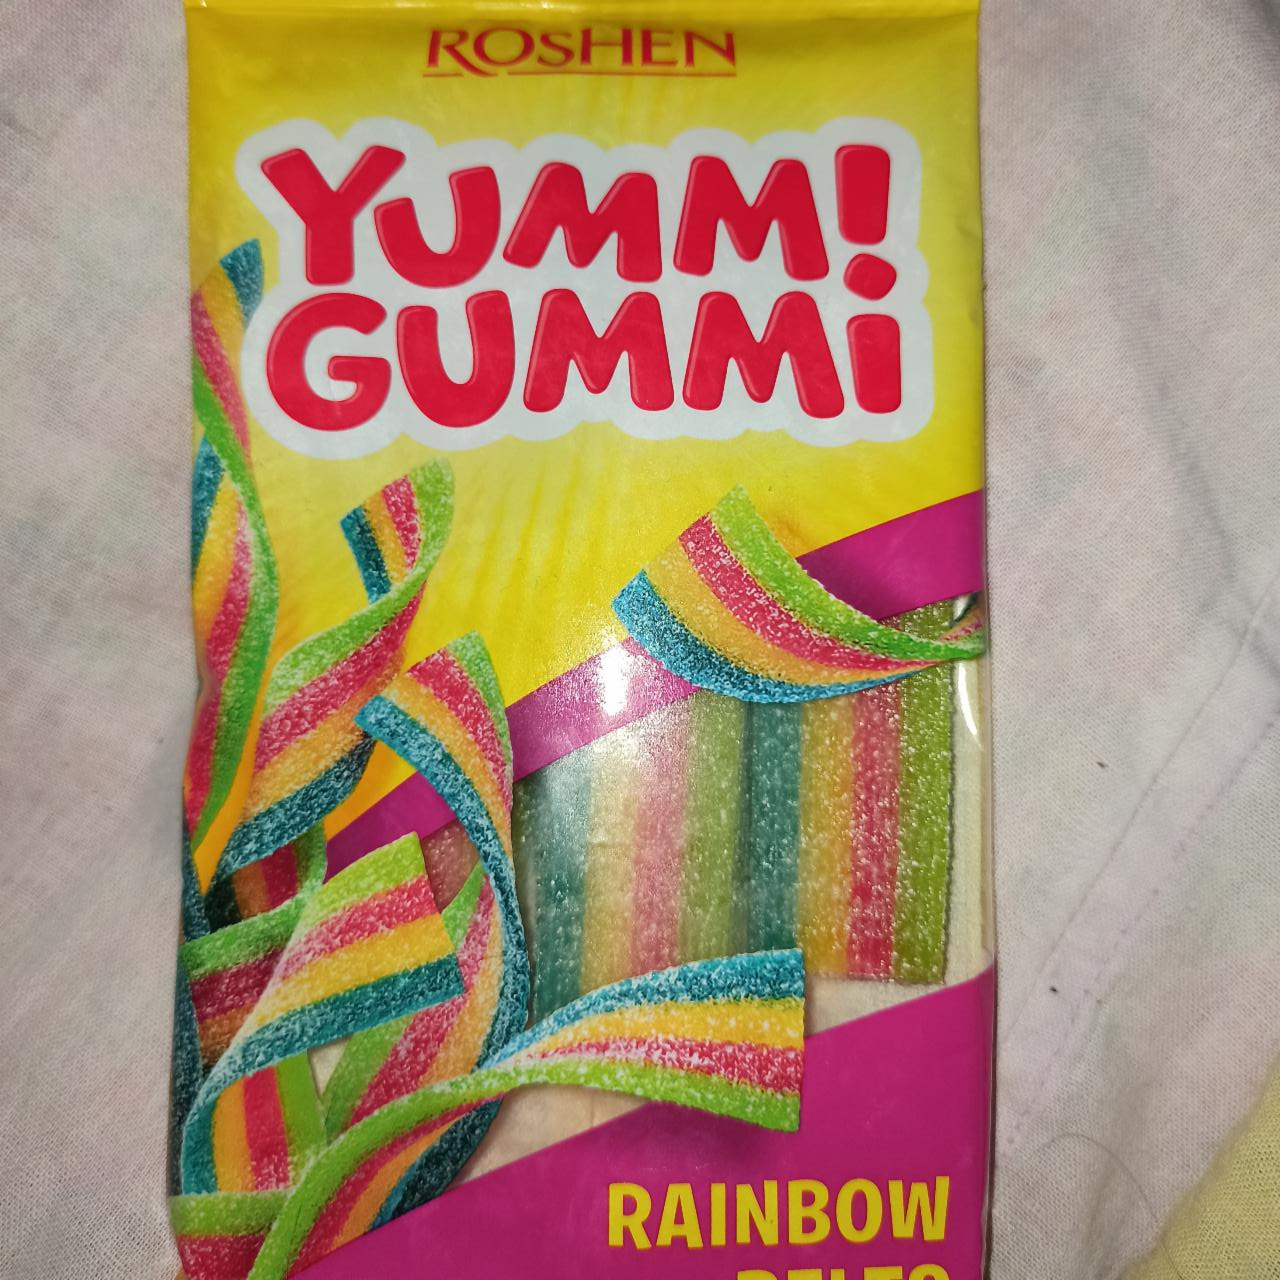 Fotografie - Yumm! gummi rainbow belts Roshen